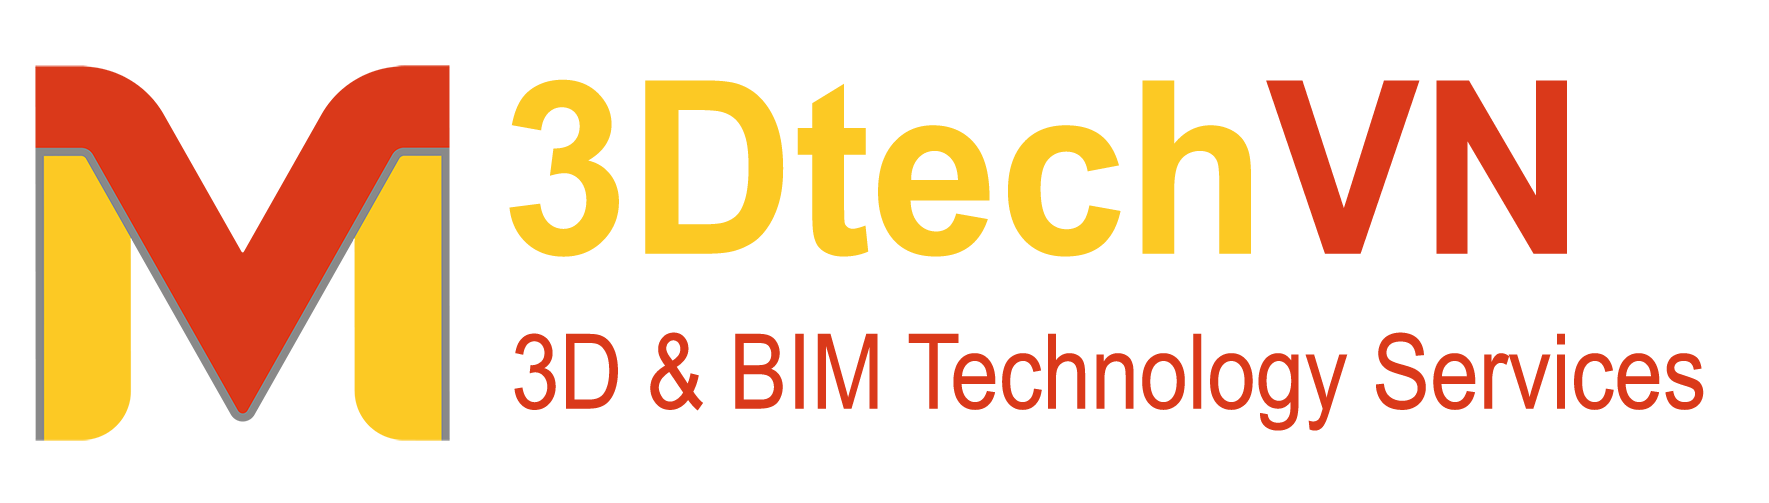 3DtechVN Services